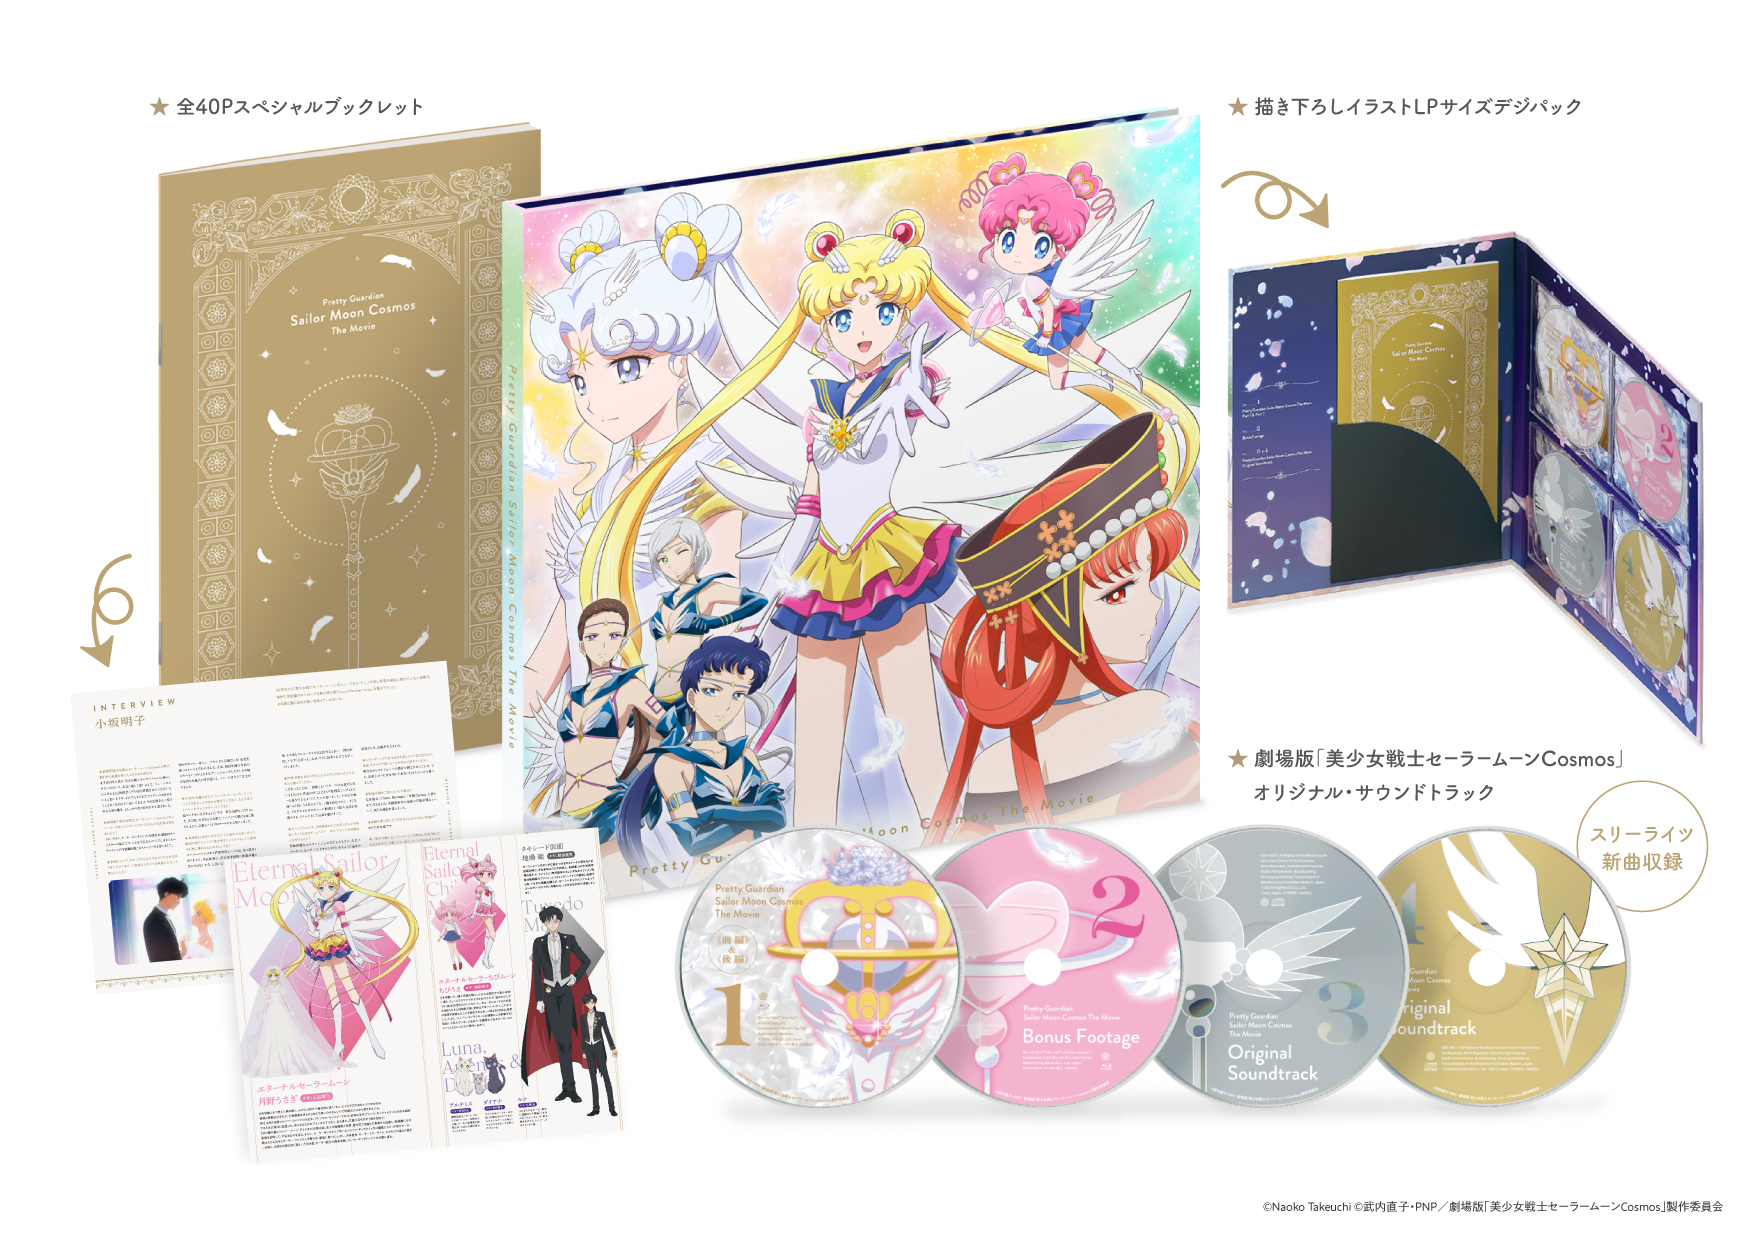 Sailor Moon Cosmos Movie DVD Standrd Edition KIBA-2348 PSL